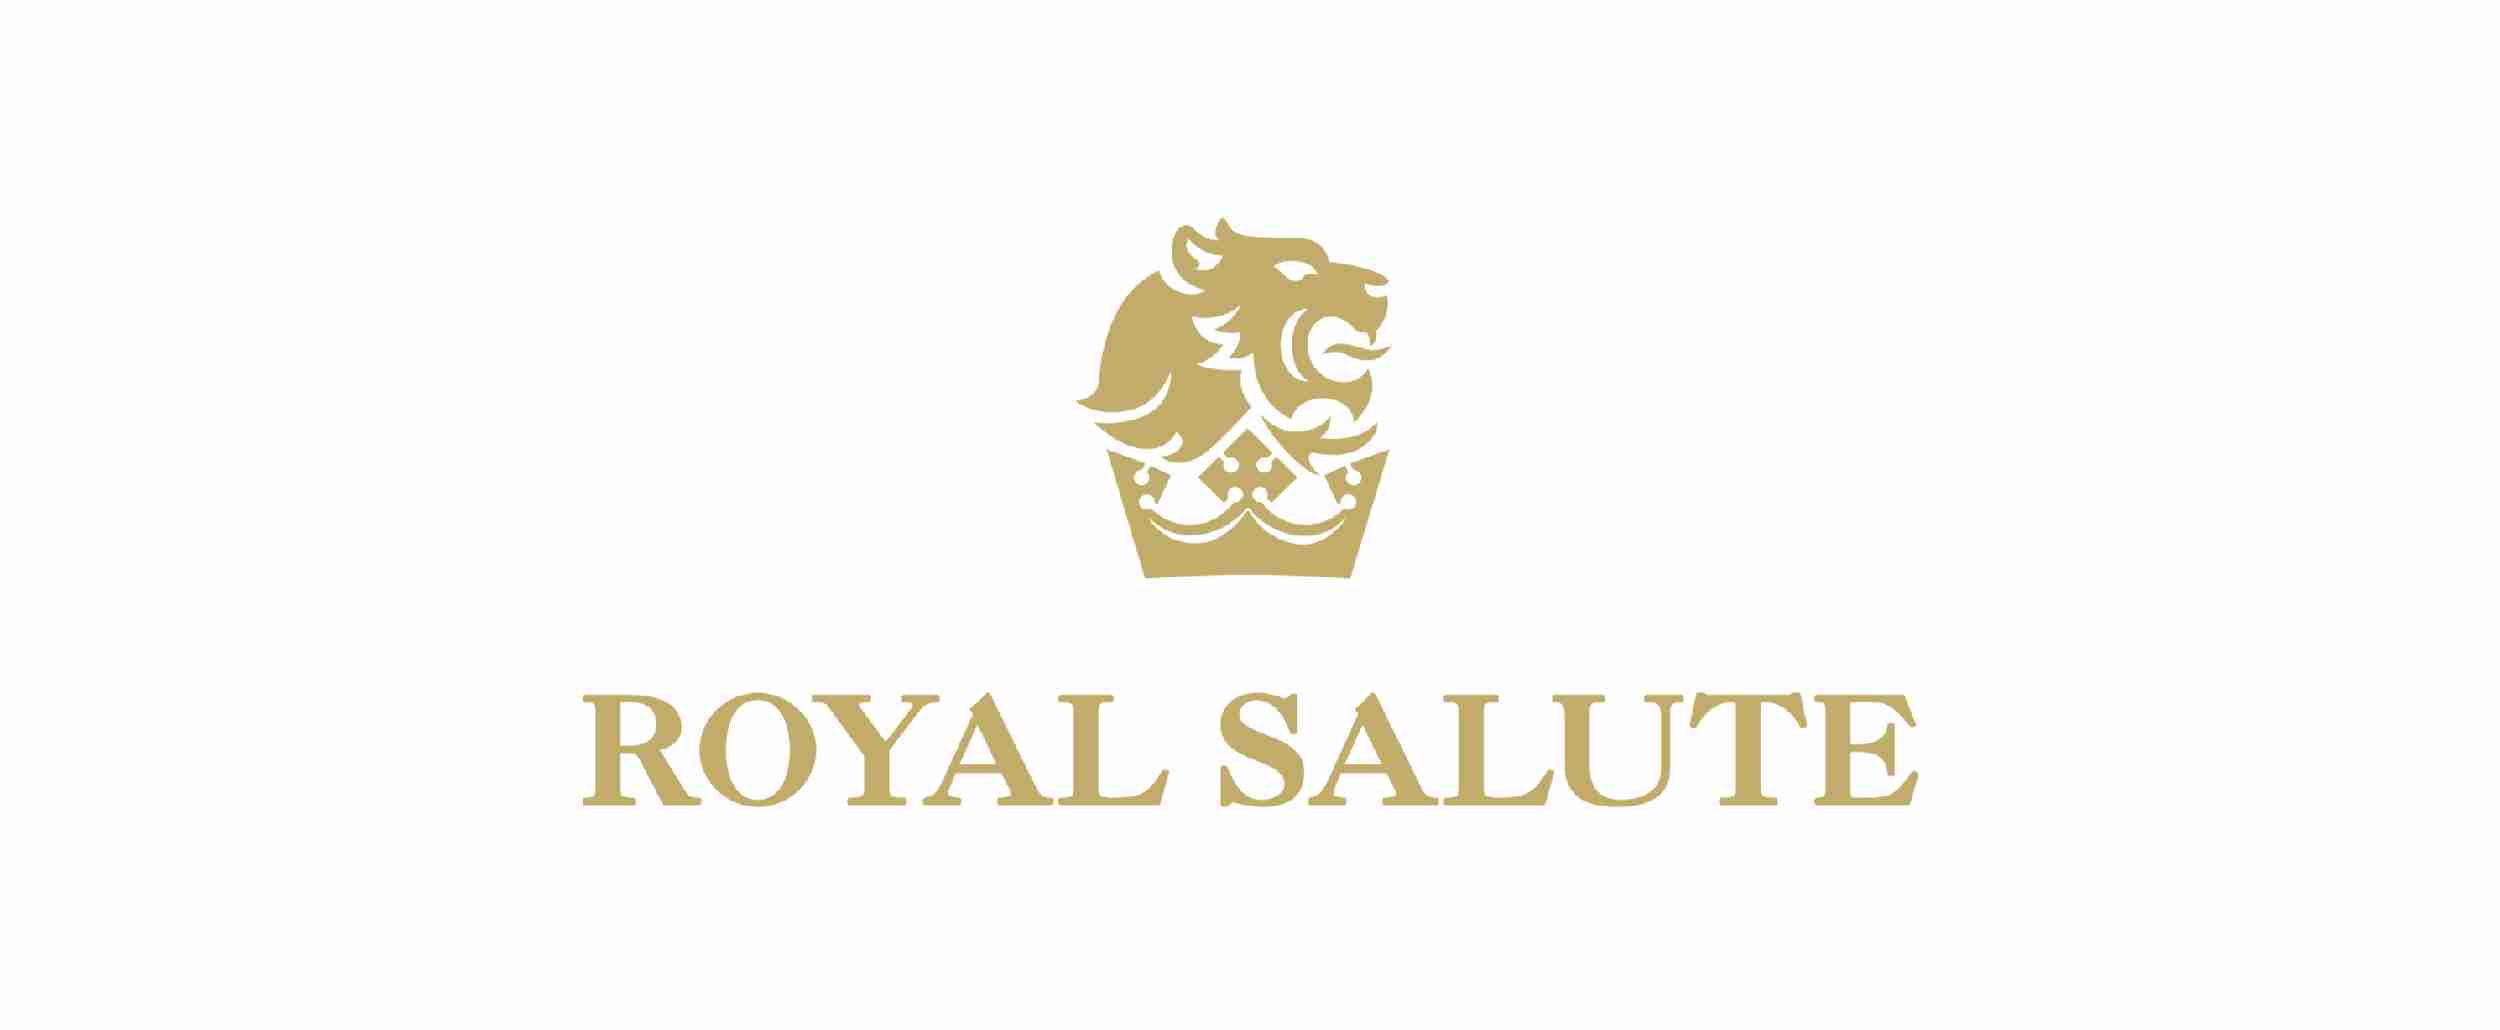 Royal Salute